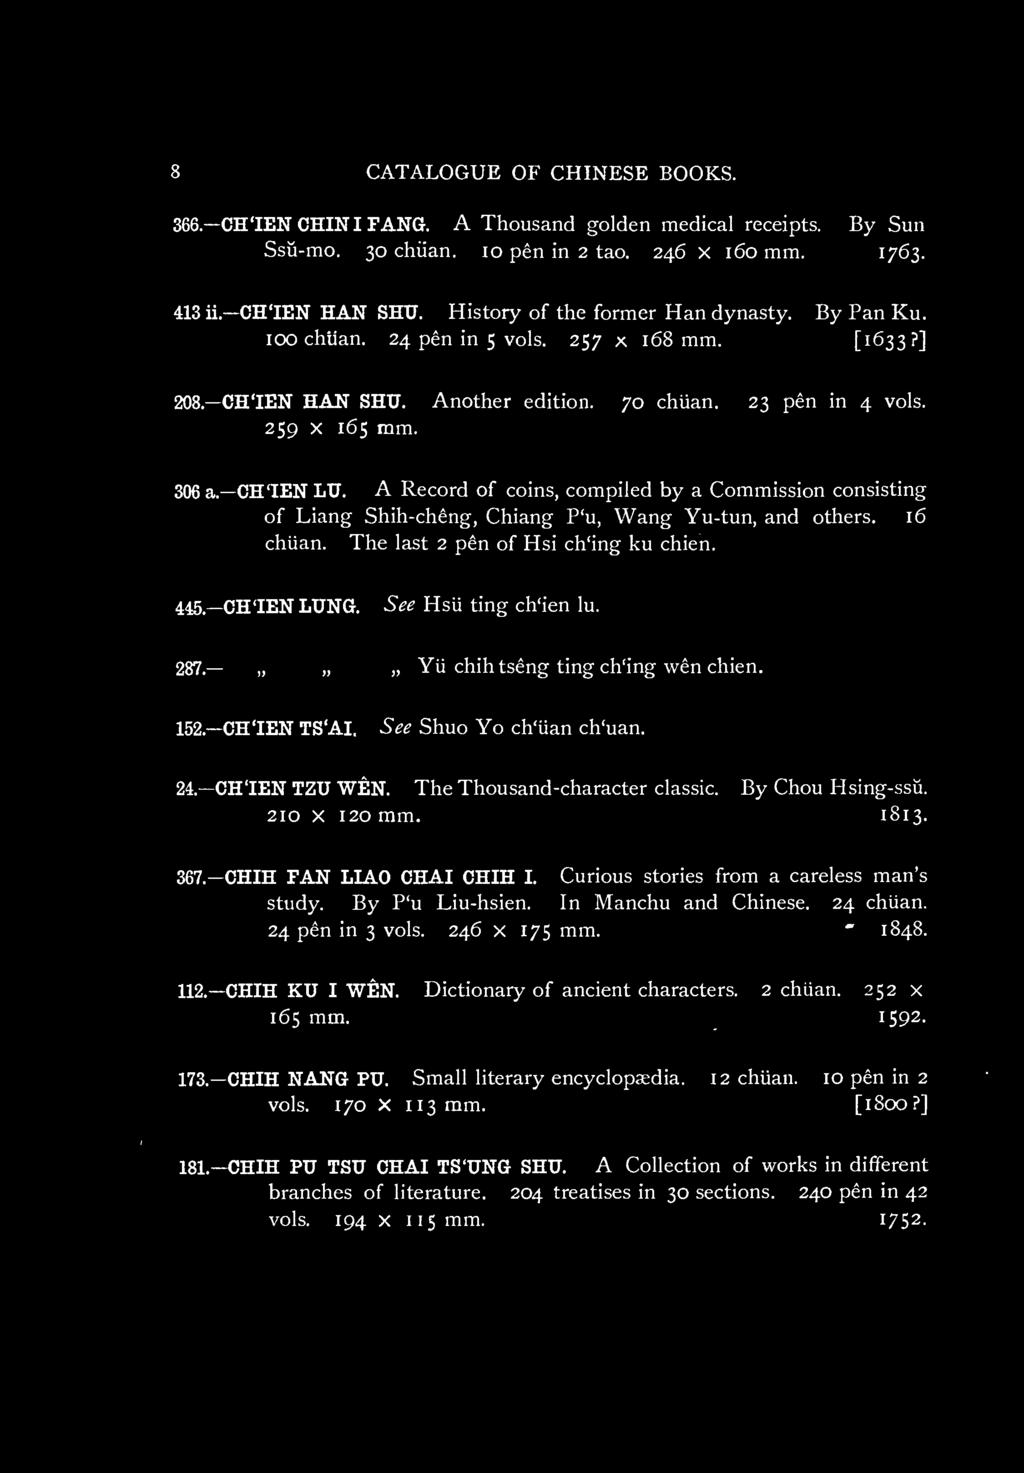 1813. 367. CHIH FAN LIAO CHAI CHIH I. Curious stories from a careless man's study. By P'u Liu-hsien. In Manchu and Chinese. 24 chiian. 24 pen in 3 vols. 246 x 175 mm. ' 1848. 112. CHIH KU I WEN.